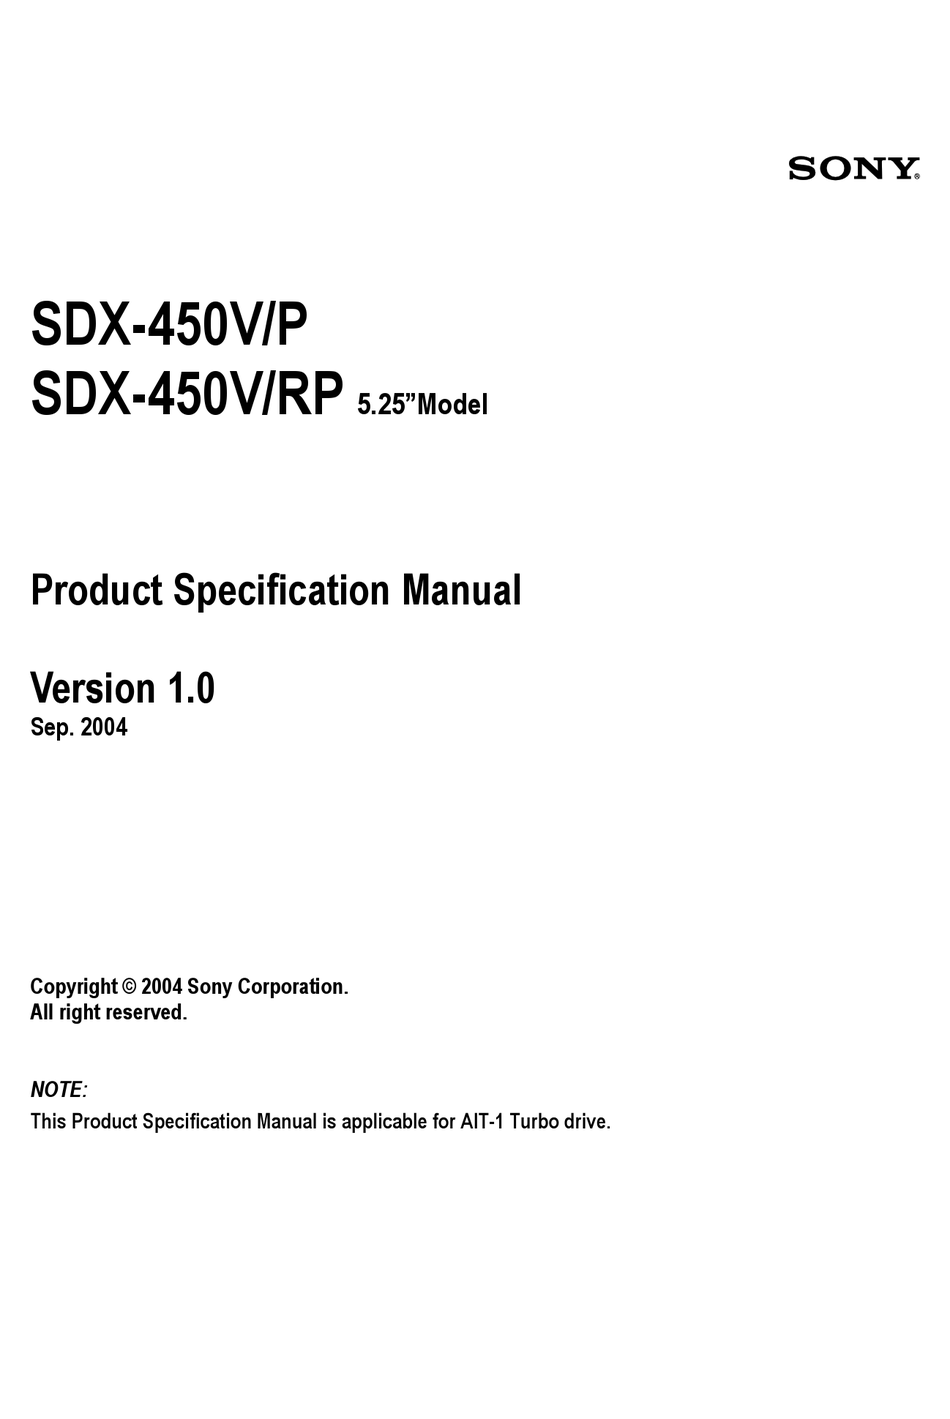 sdx-450v cumulative error history